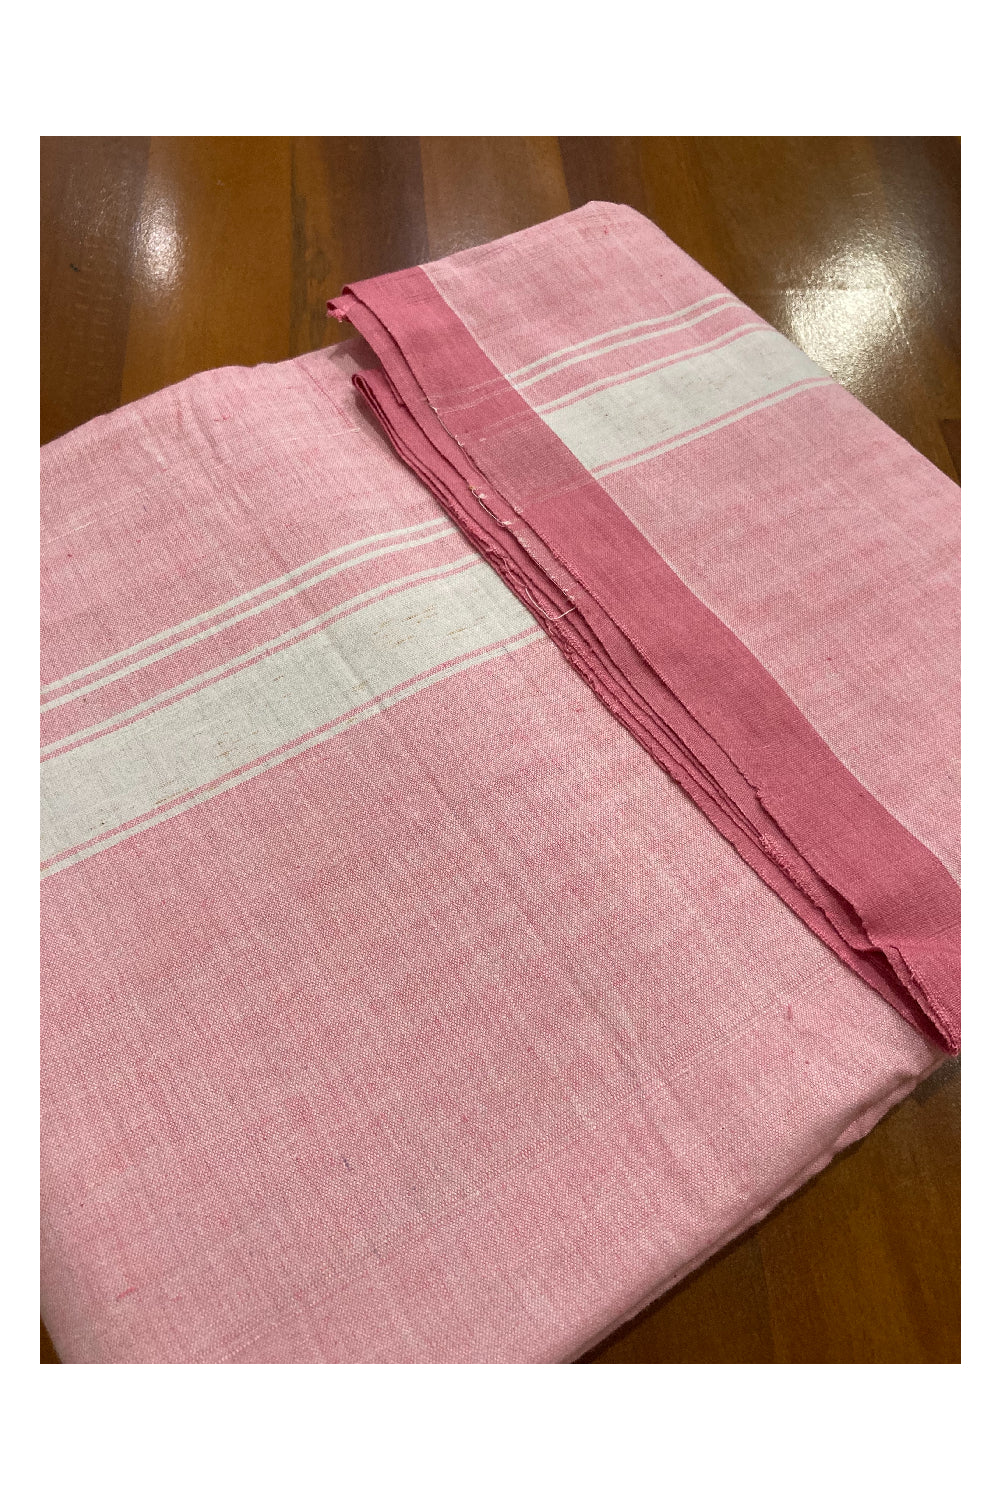 Southloom Premium Handloom Pink Solid Single Mundu (Lungi) with White Border